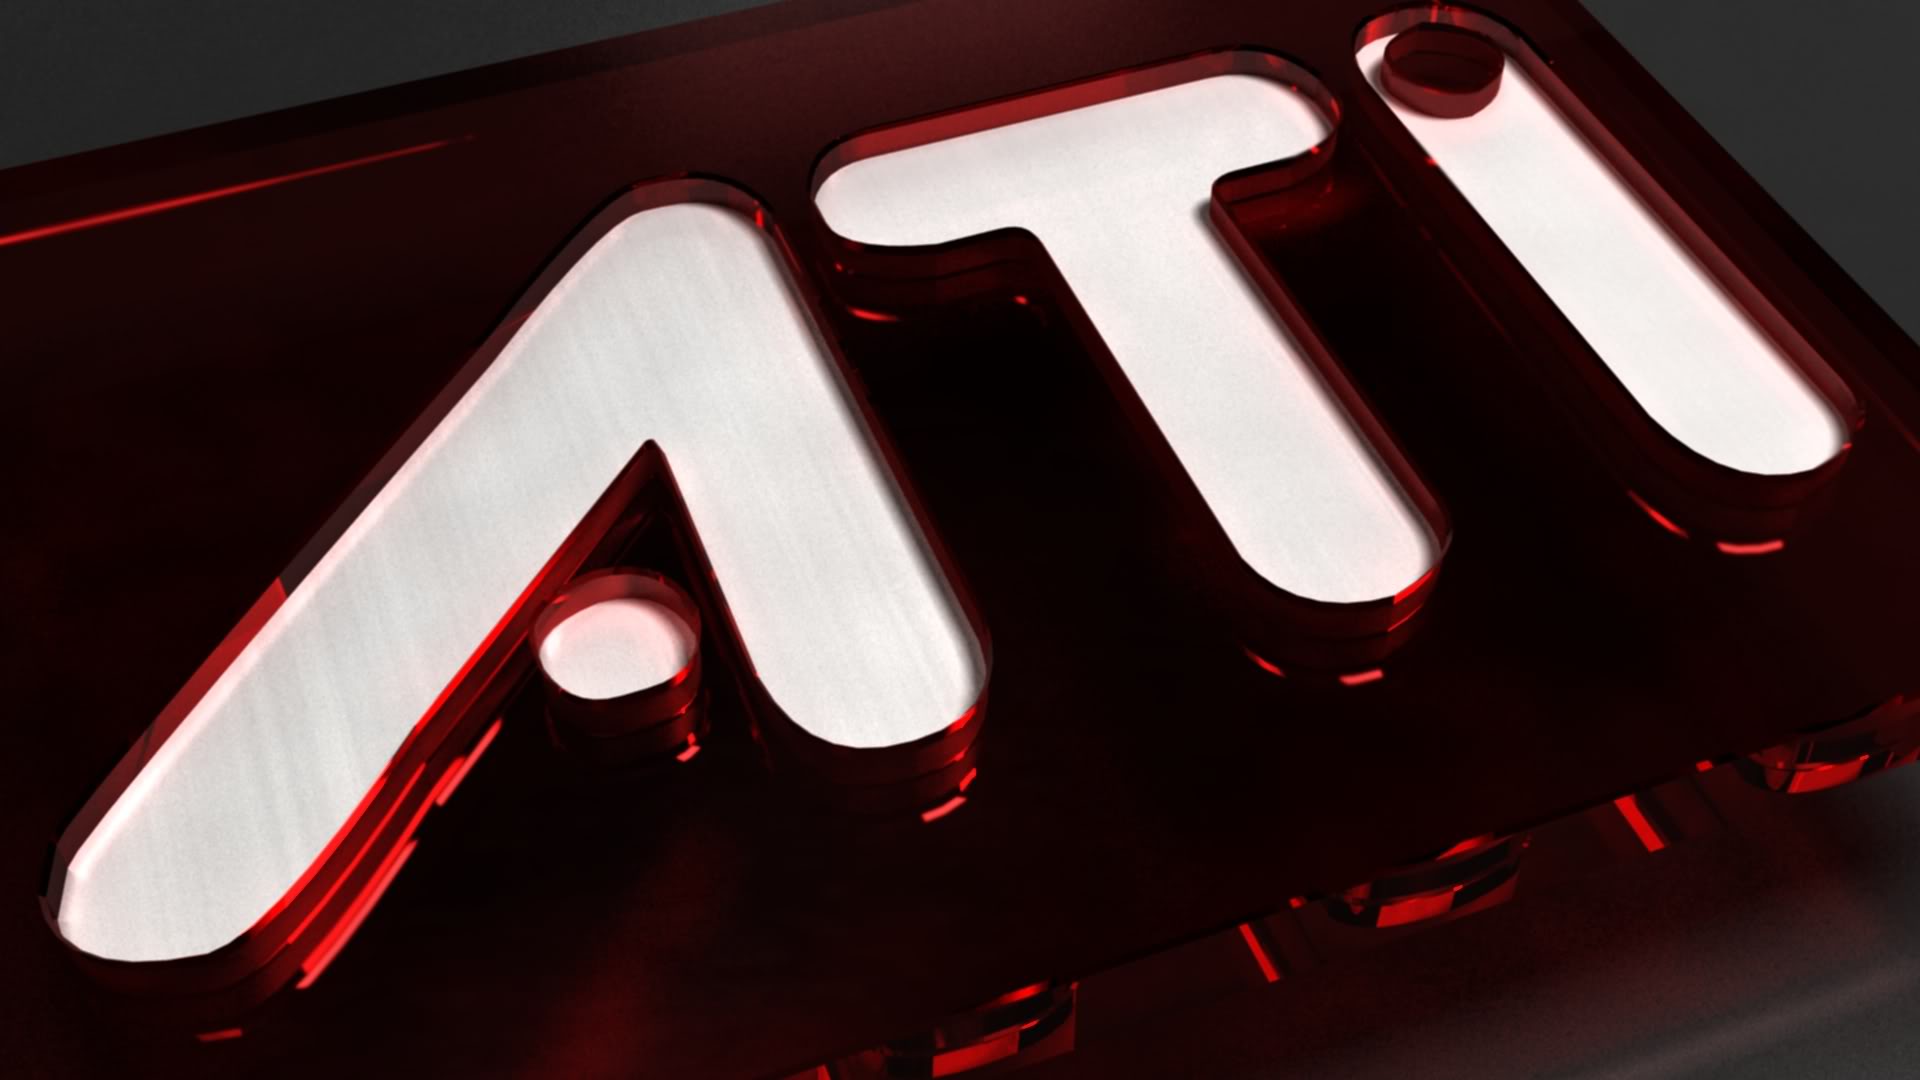 Ati Render Full HD By Ferdam Graphics Code